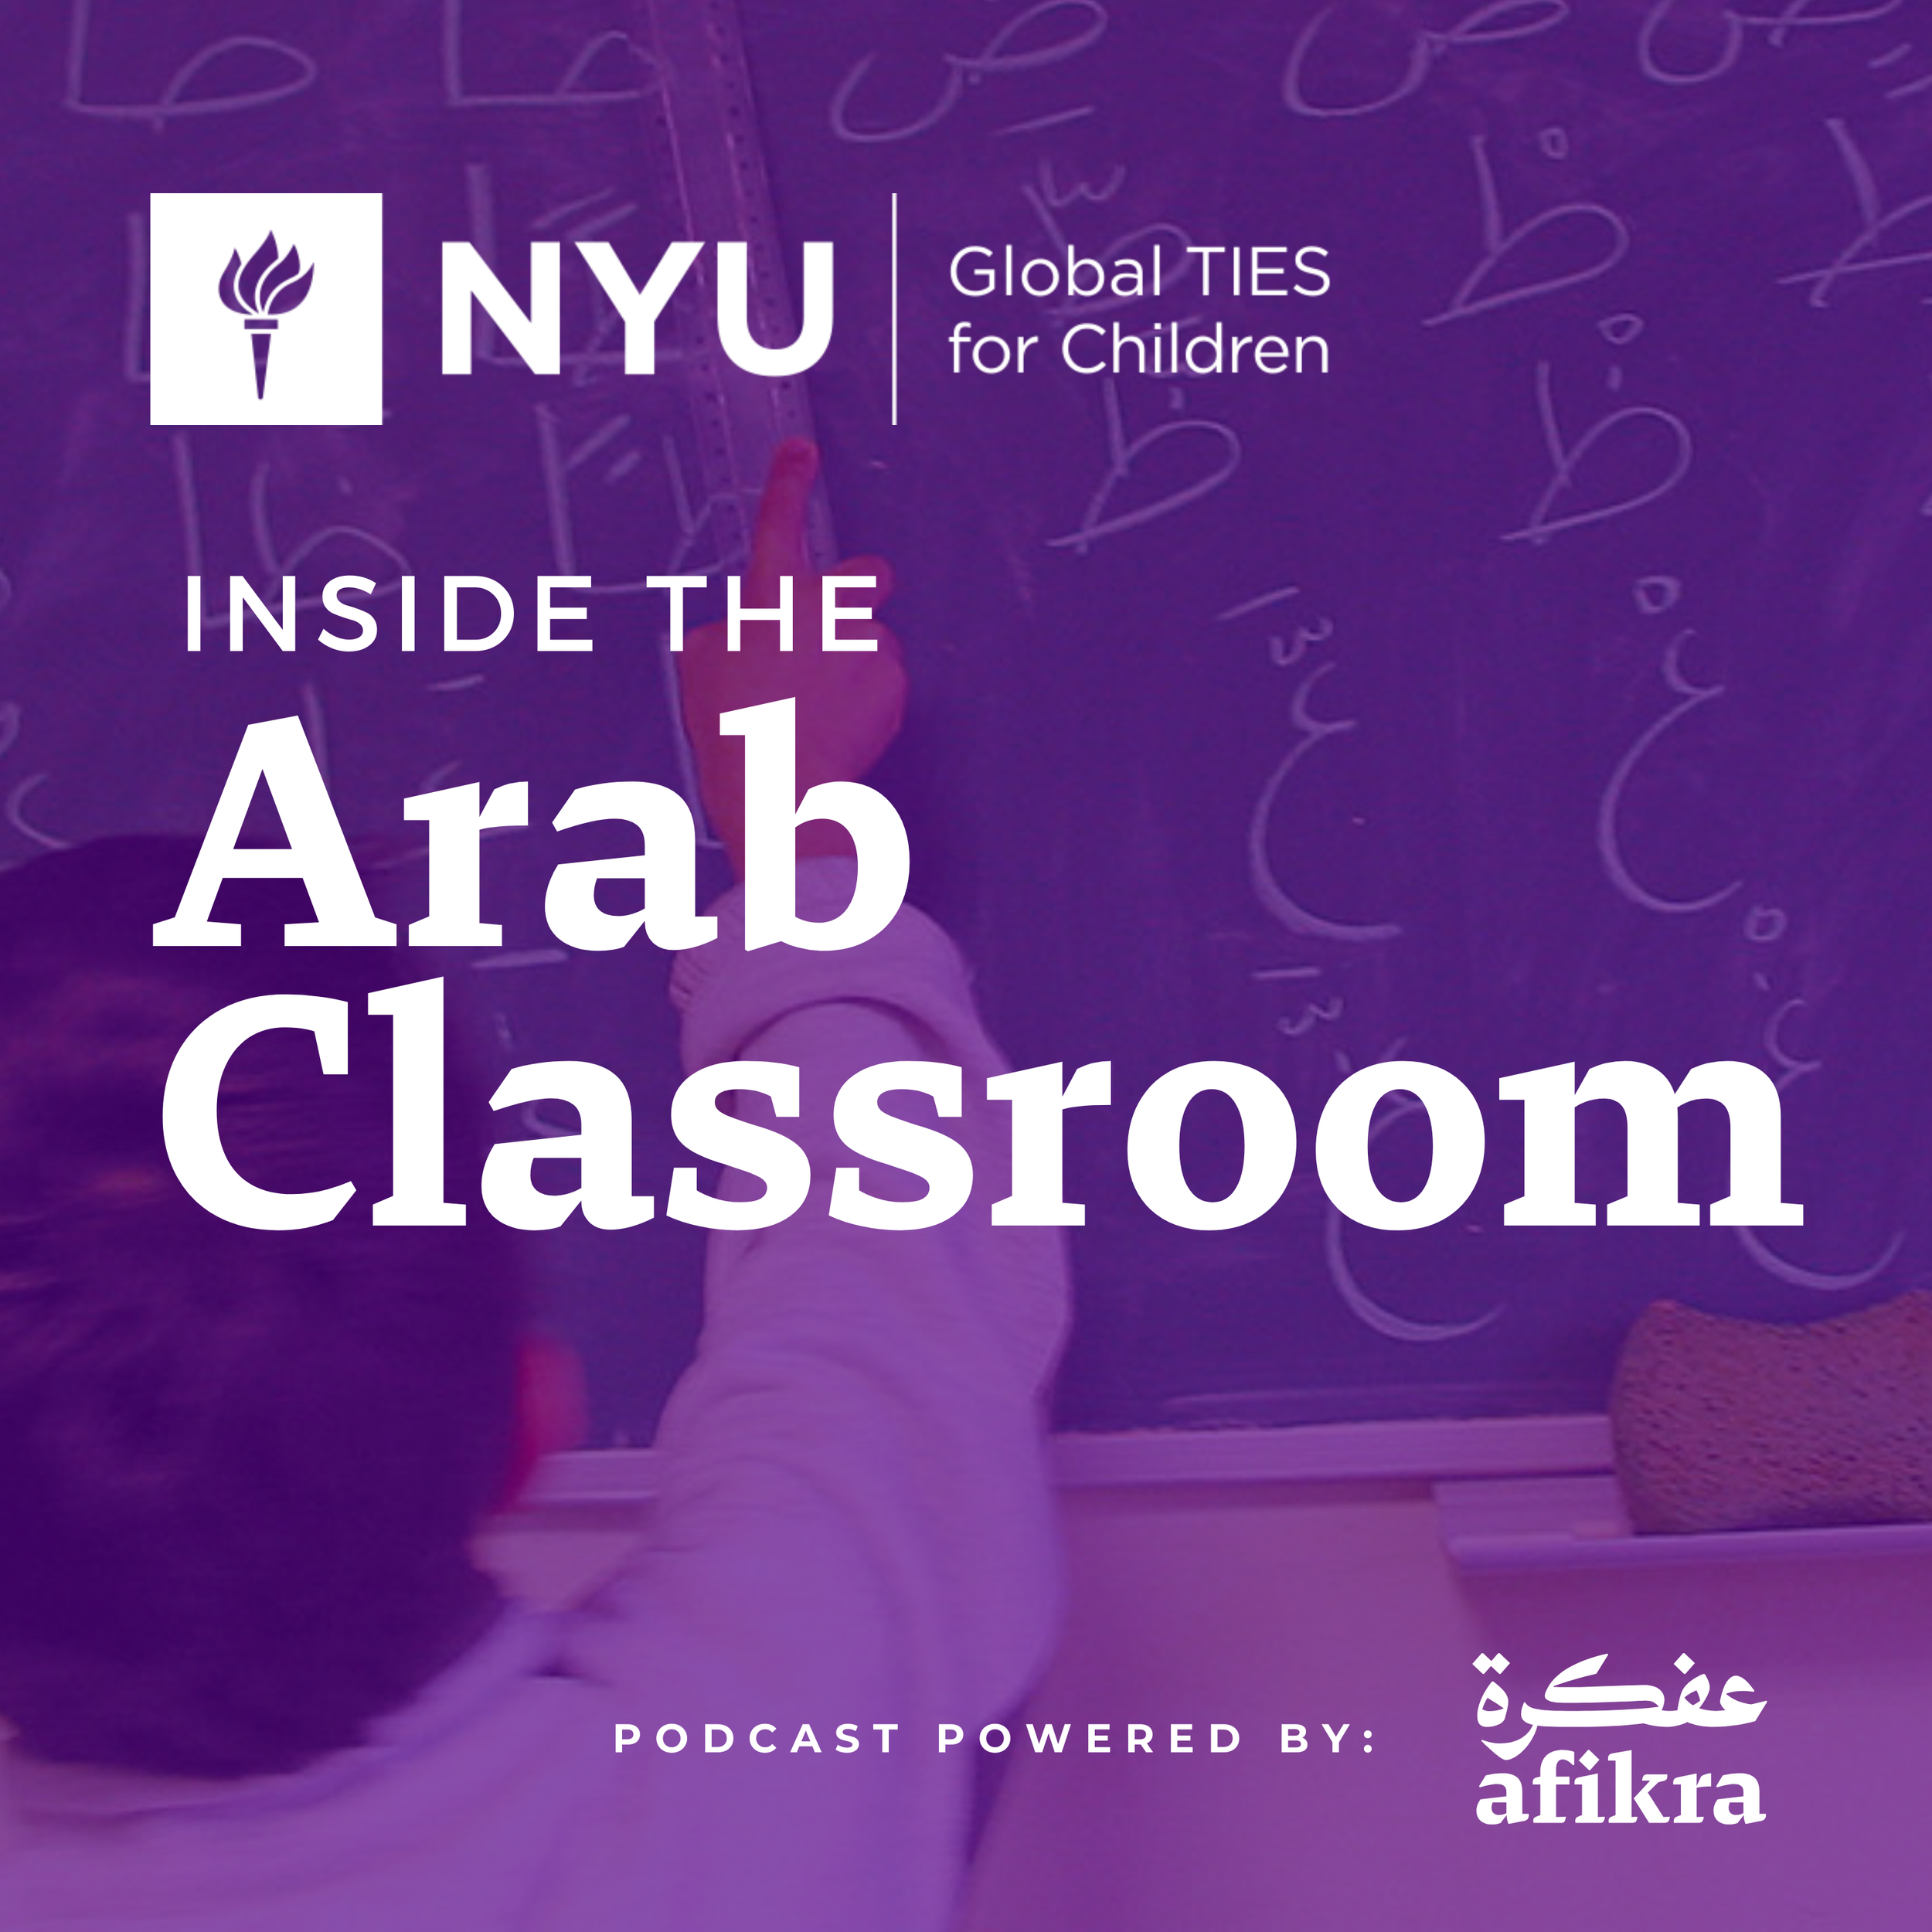 INSIDE THE ARAB CLASSROOM | NYU GLOBAL TIES FOR CHILDREN